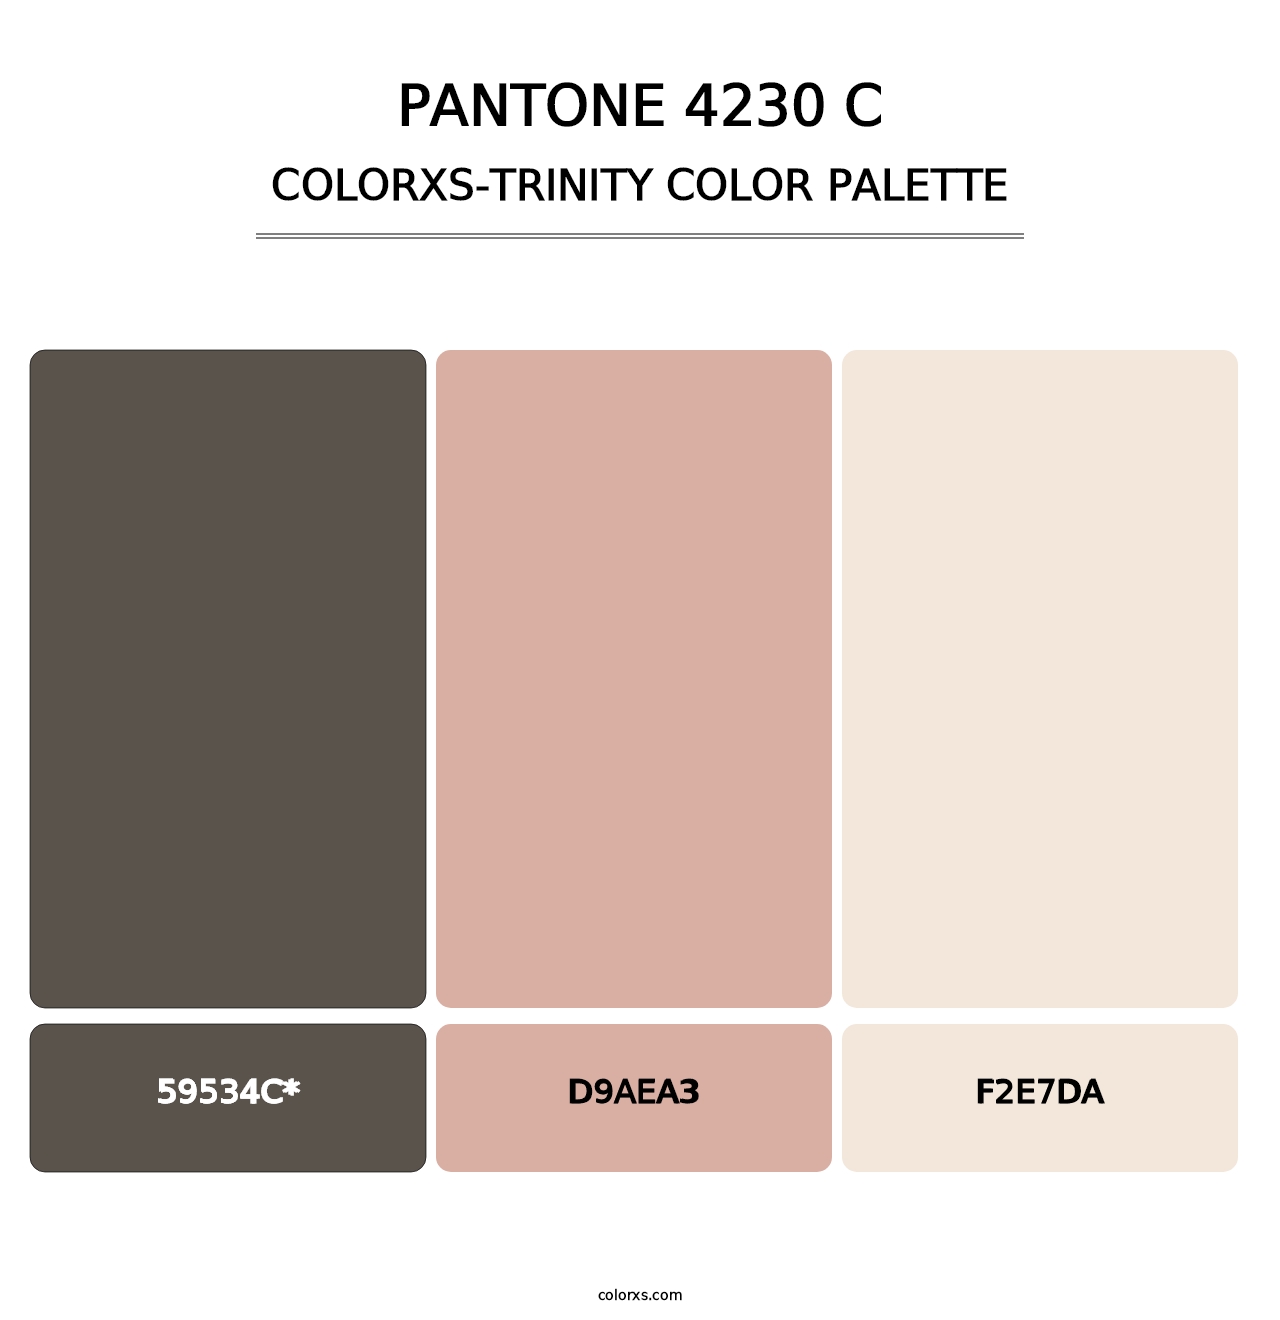 PANTONE 4230 C - Colorxs Trinity Palette